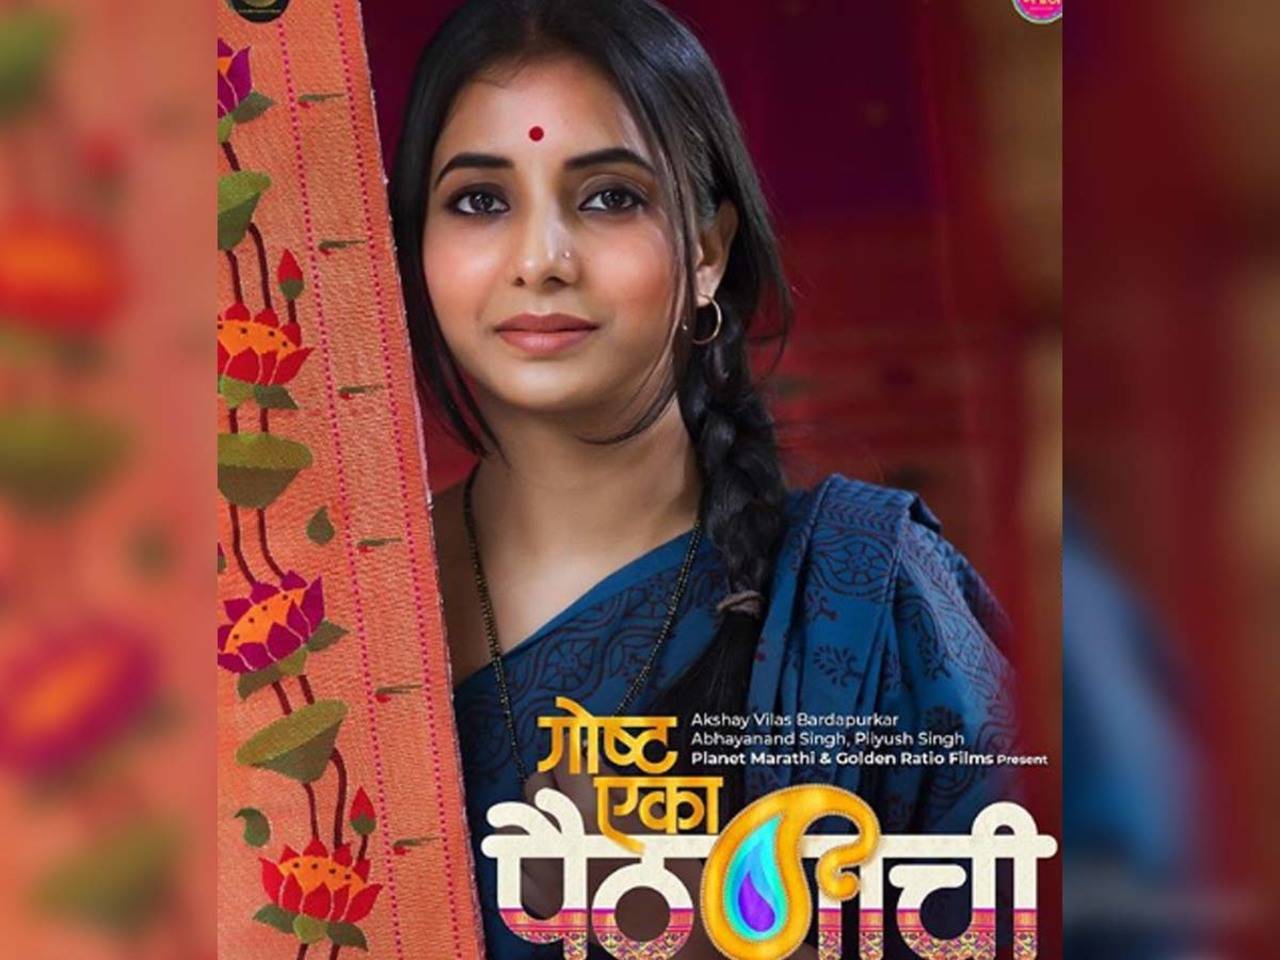 Sayali Sanjeev looks promising in the first look poster of 'Goshta